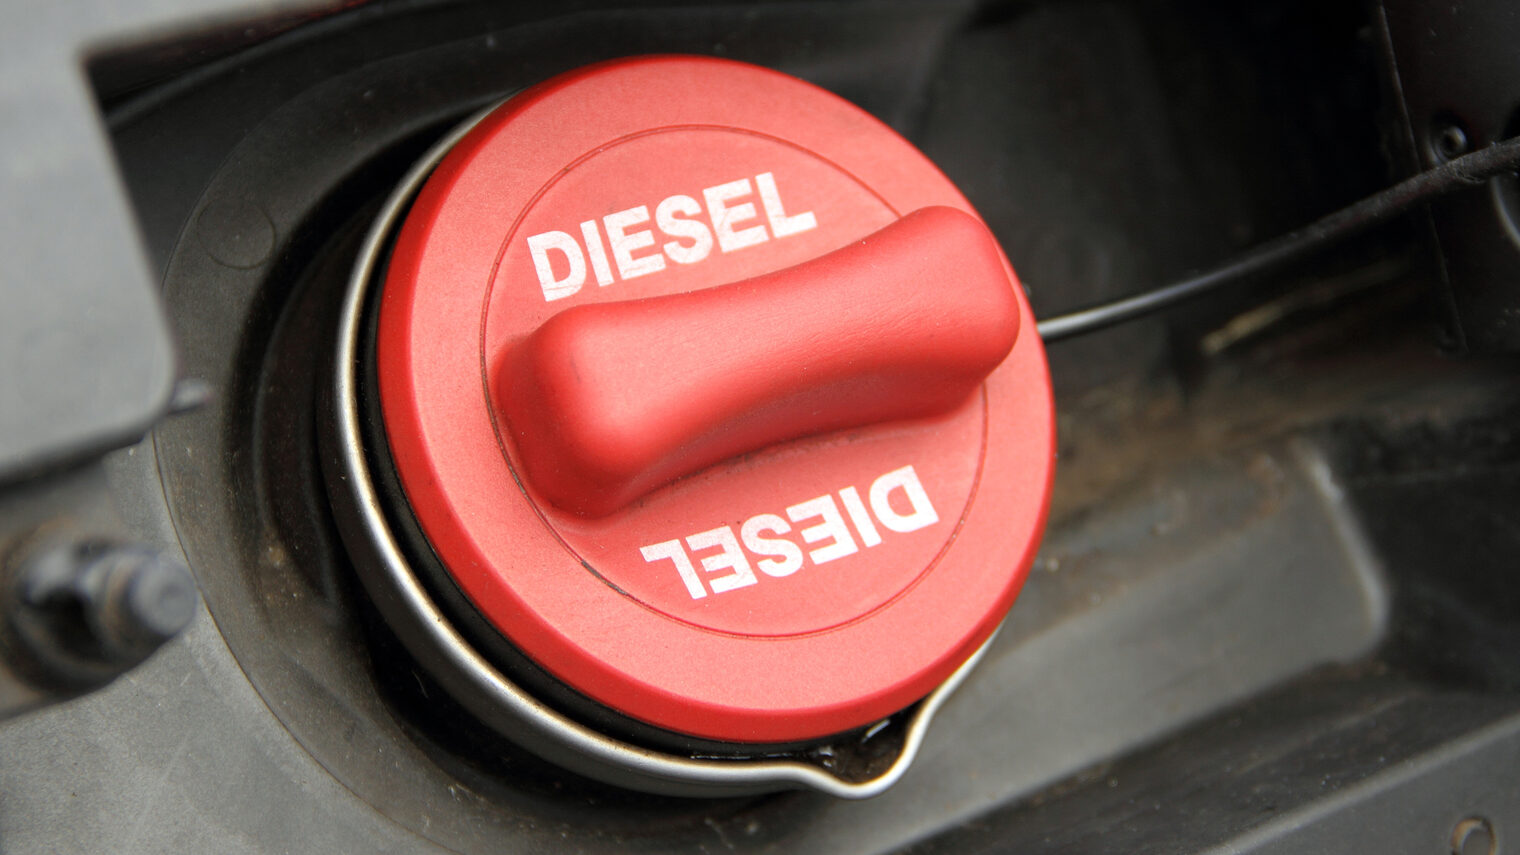 Diesel, Tanken, Tankstelle, Auto, Kfz. Bild: maho / stock.adobe.com